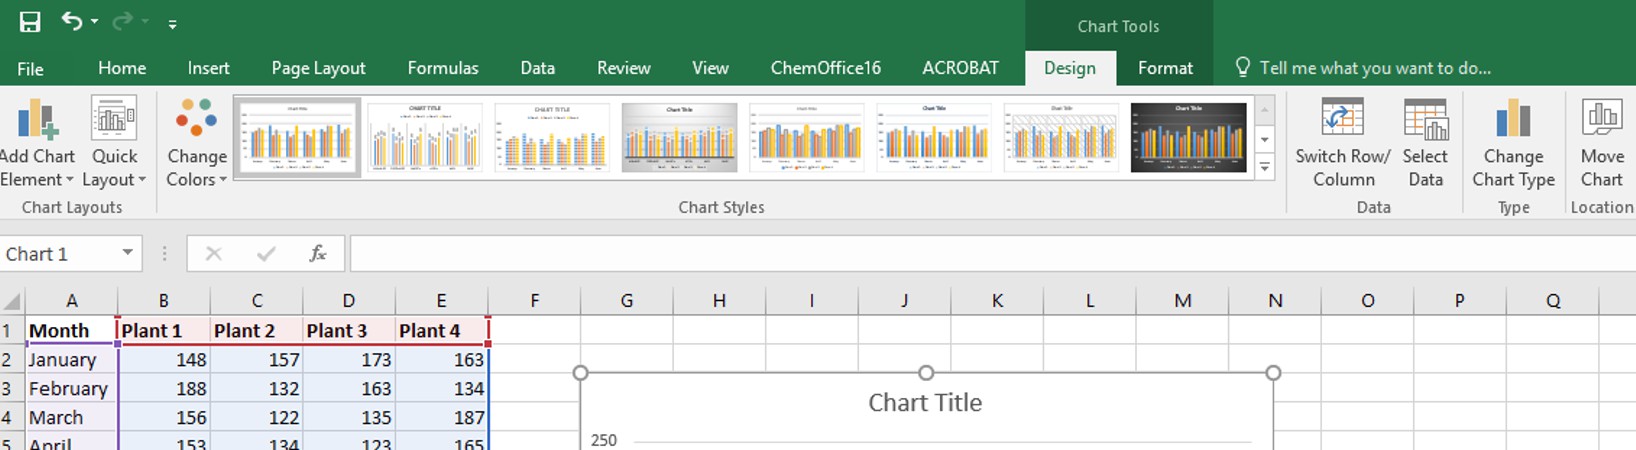 Excel - Design Chart